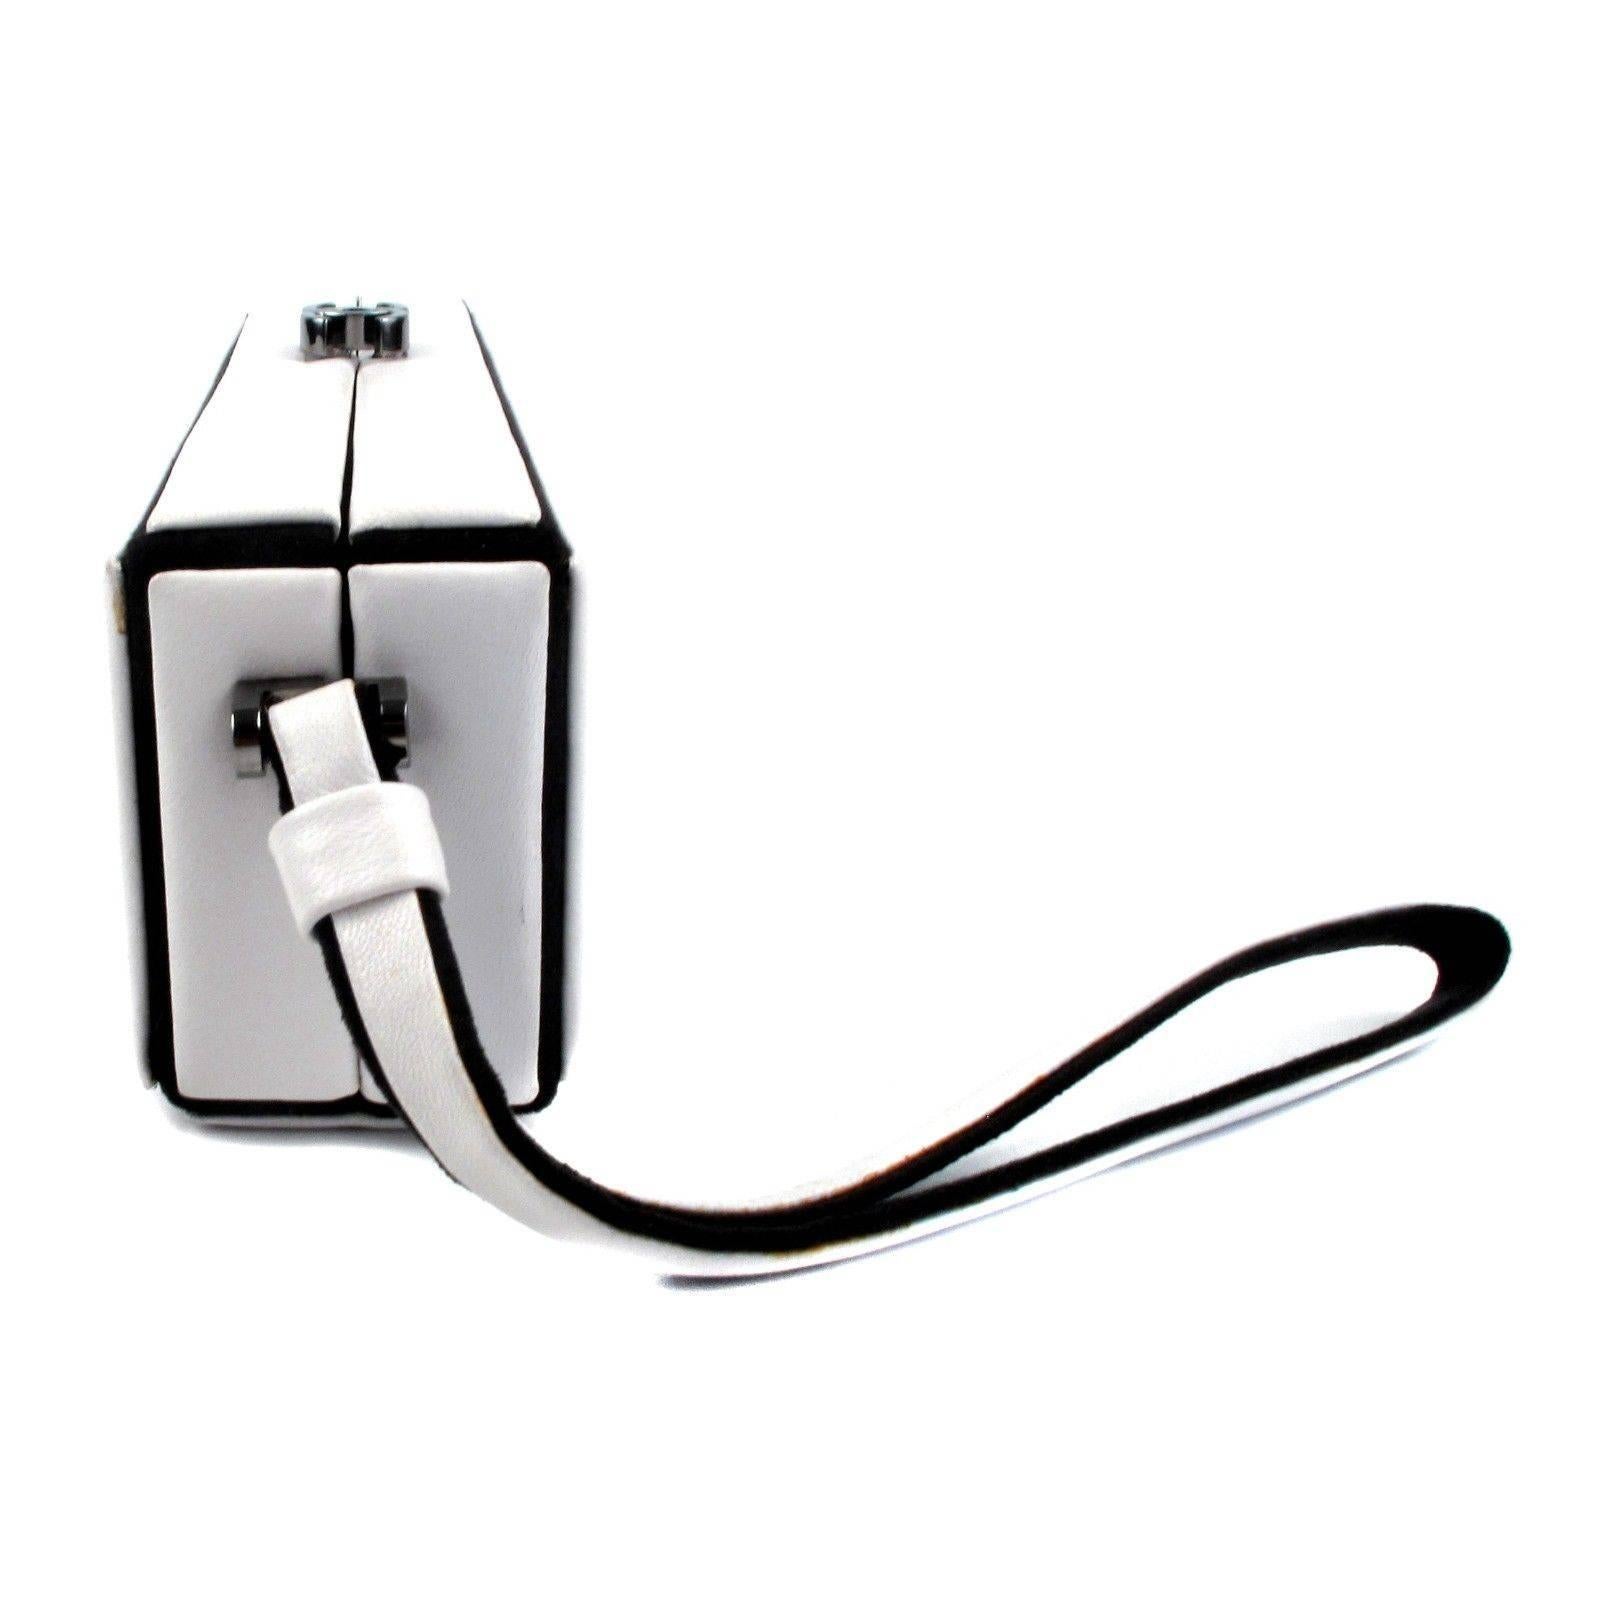 Women's Chanel Clutch Box - Wristlet White & Black Leather CC Minaudie Bag Handbag Case